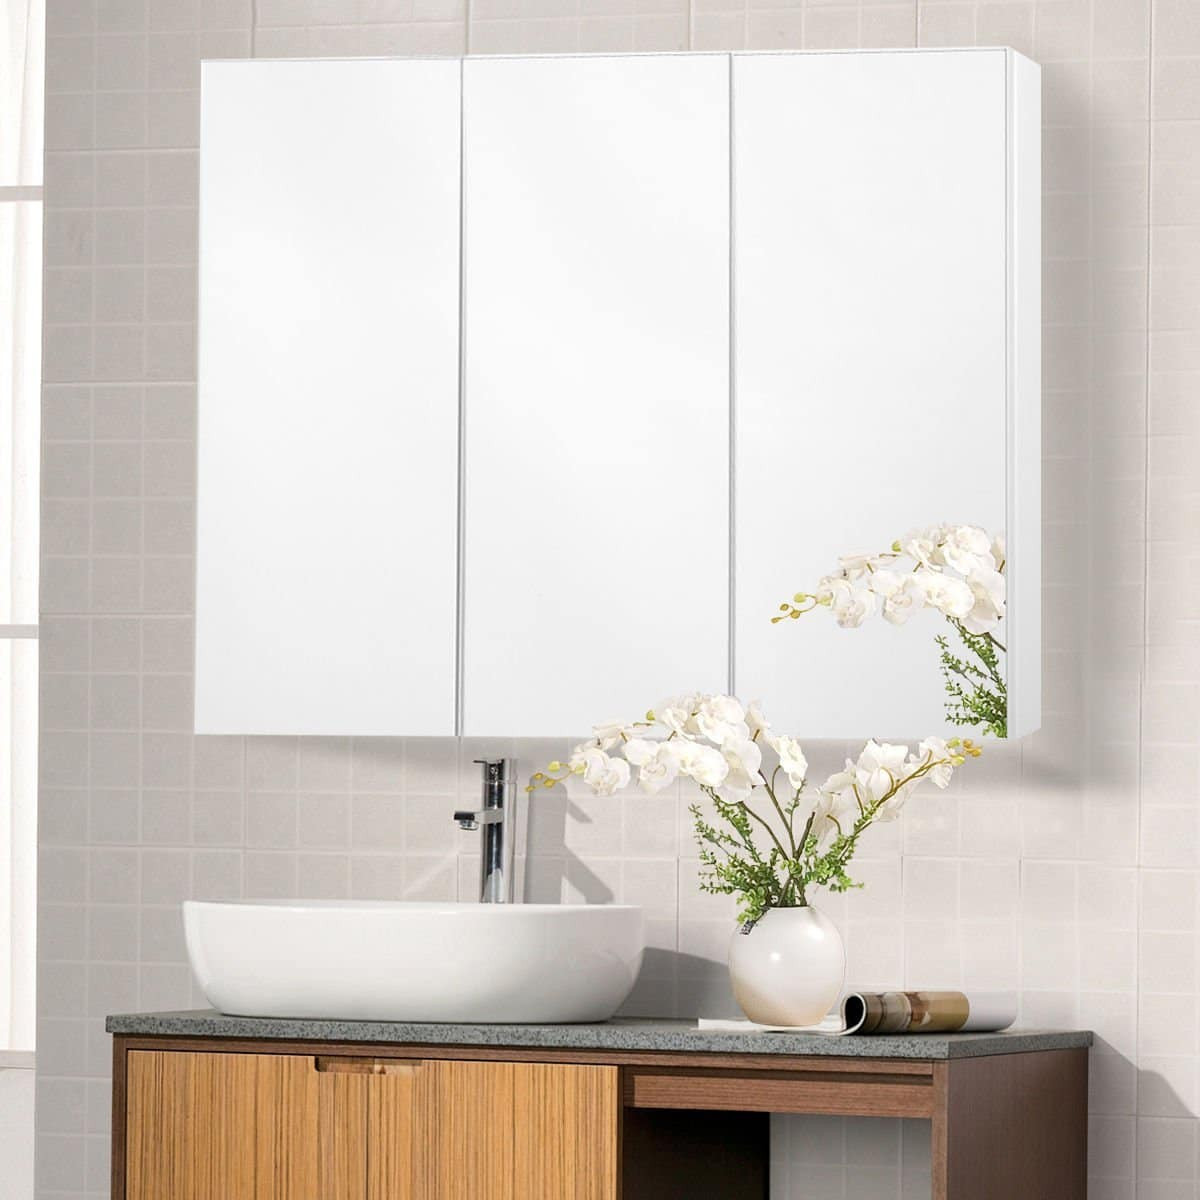 Mirrored Bathroom Cabinet
 Top 10 Best Mirror Medicine Cabinets in 2019